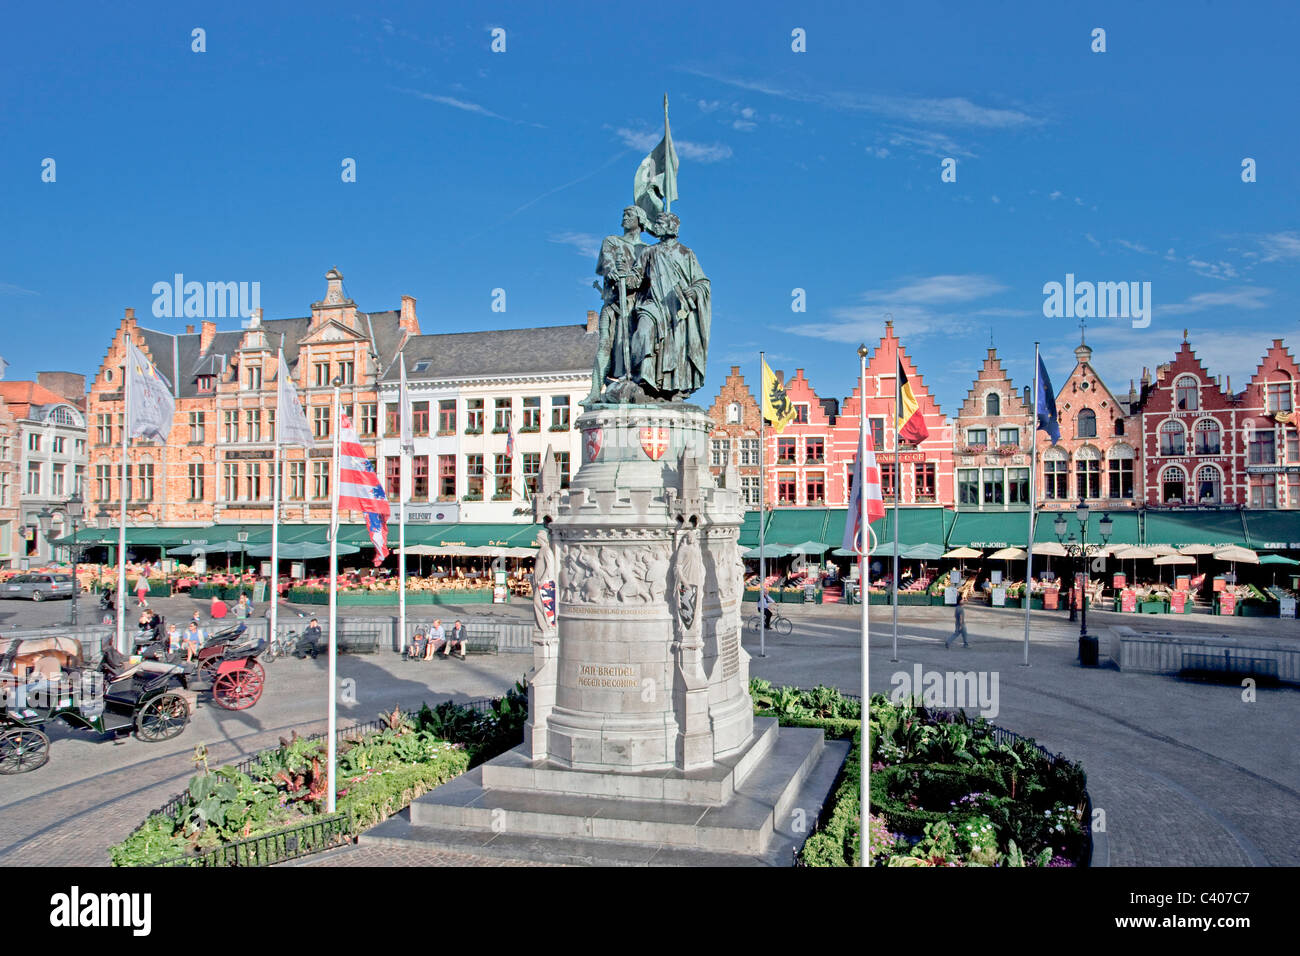 Belgium, Europe, Brugge, marketplace, Jan Breidel, monument, statue, houses, homes, gables Stock Photo